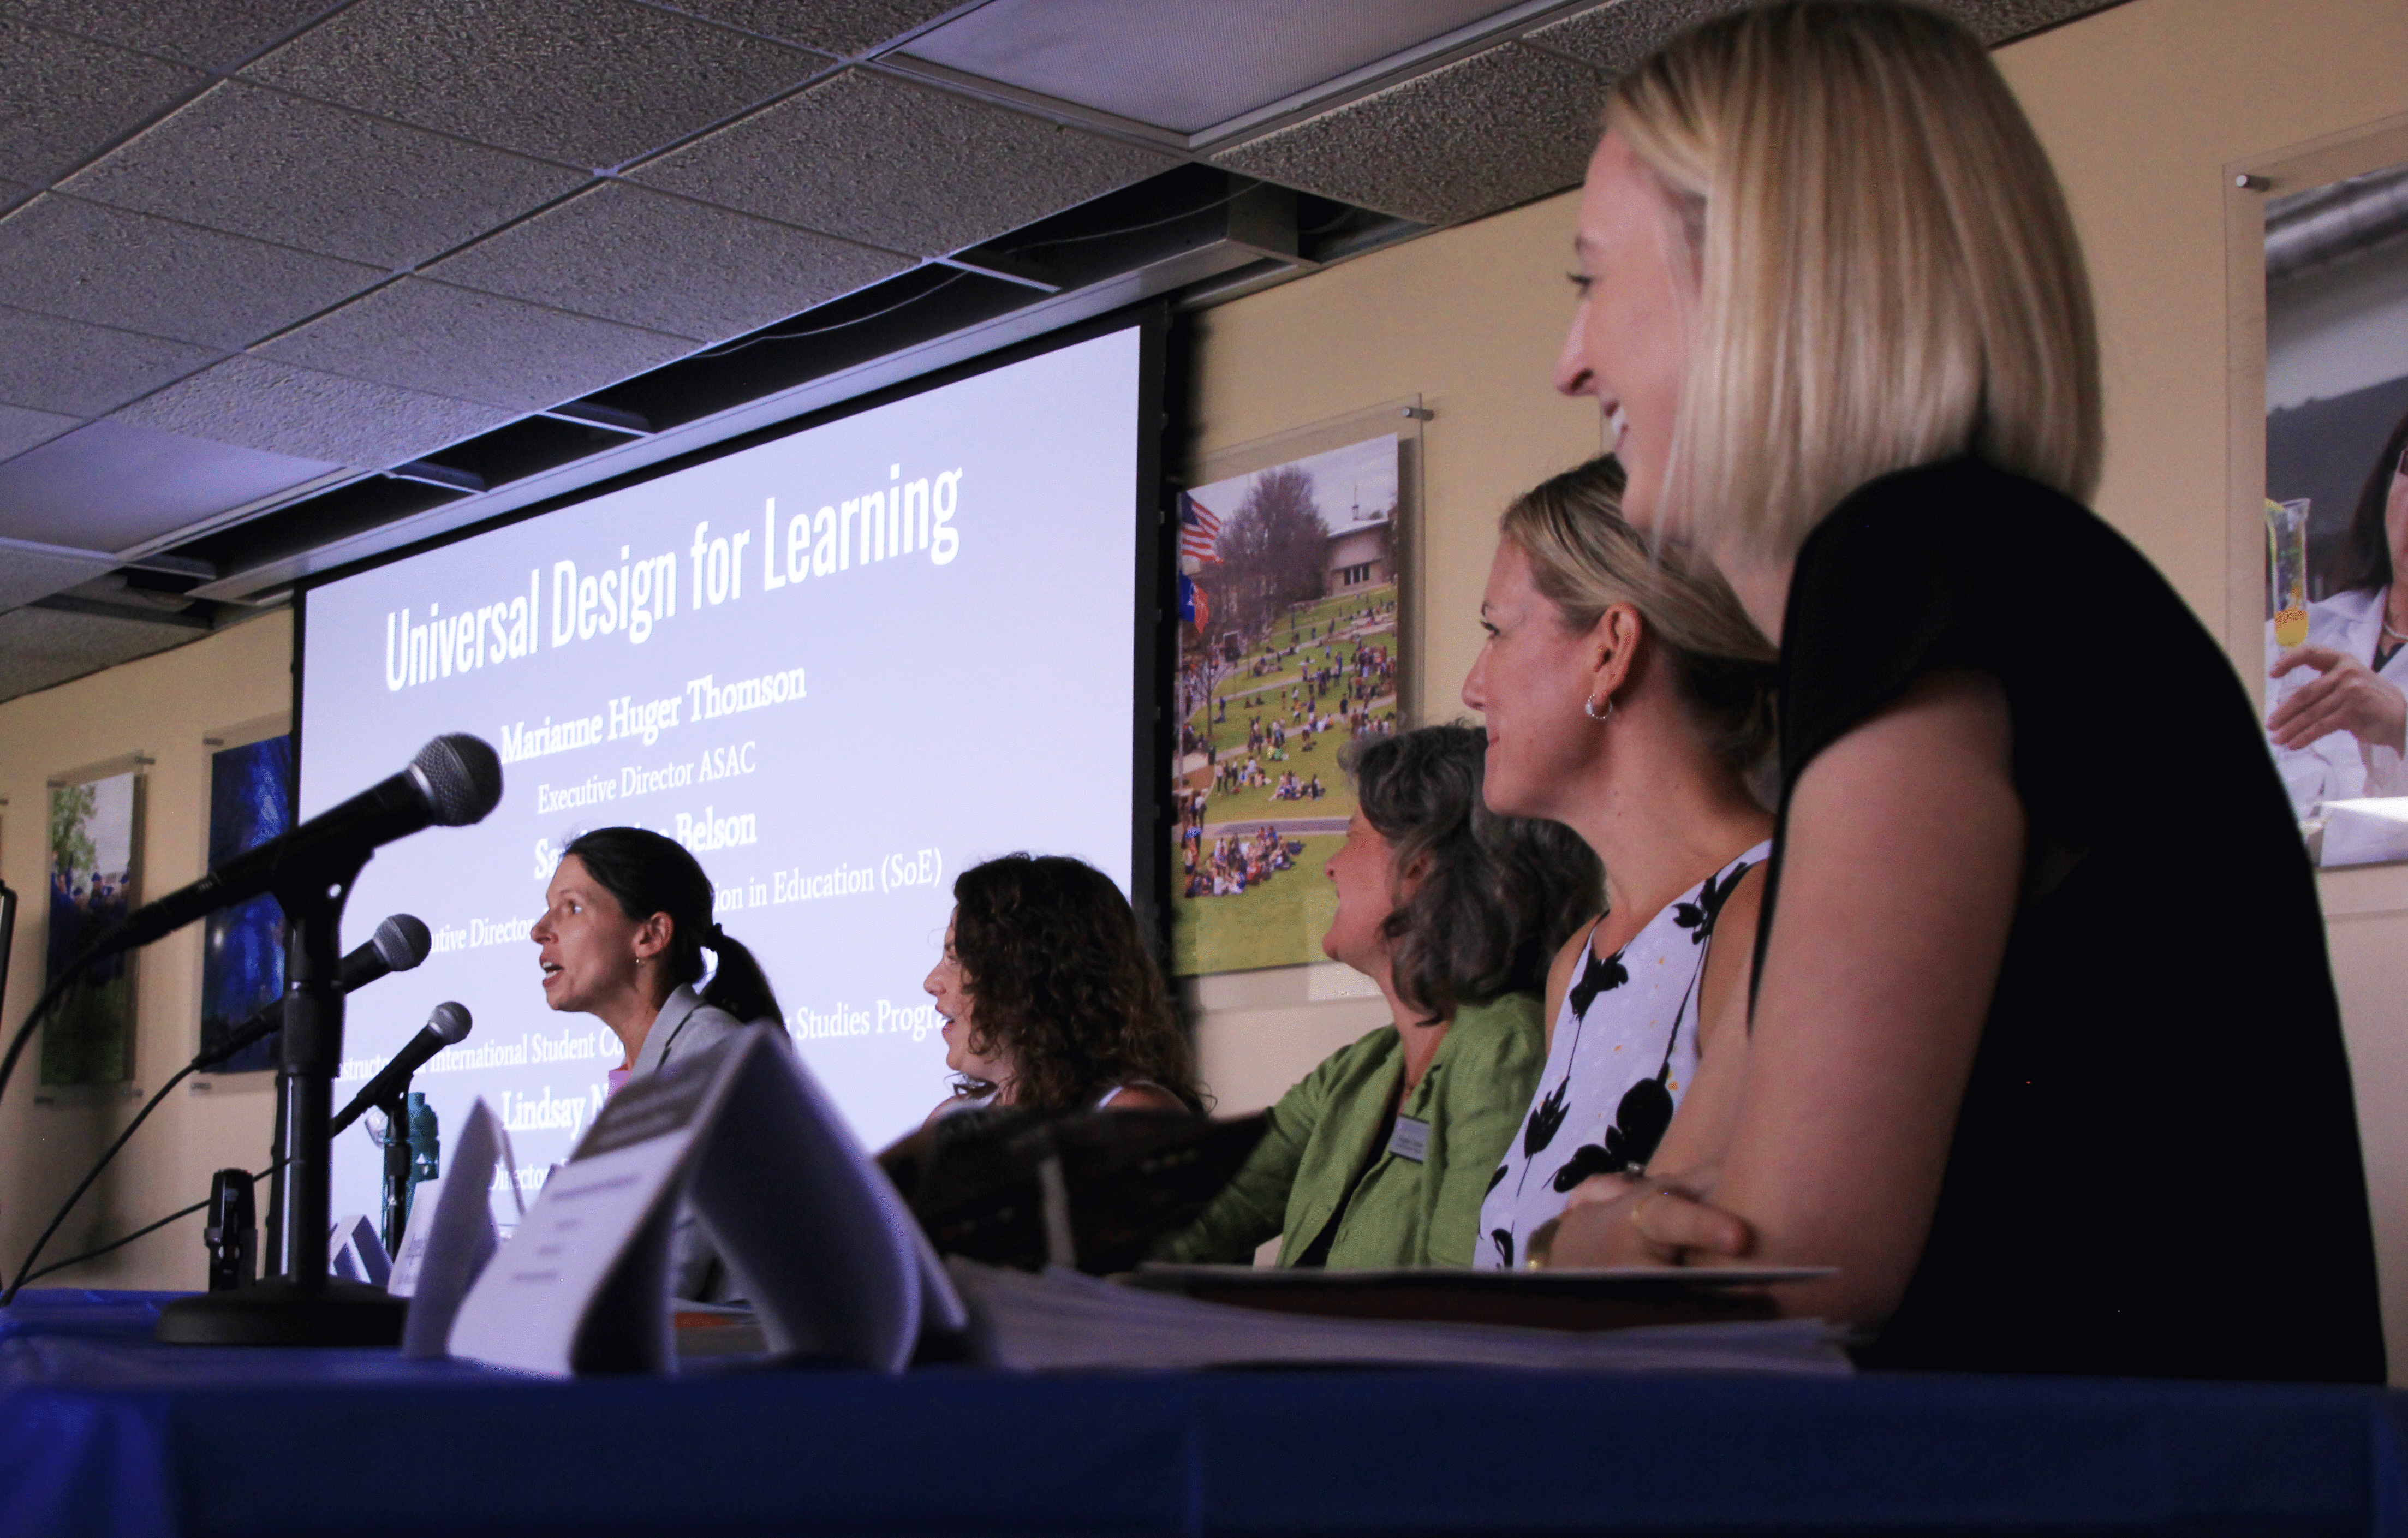 Panel of 4 individuals discussing Universal Design